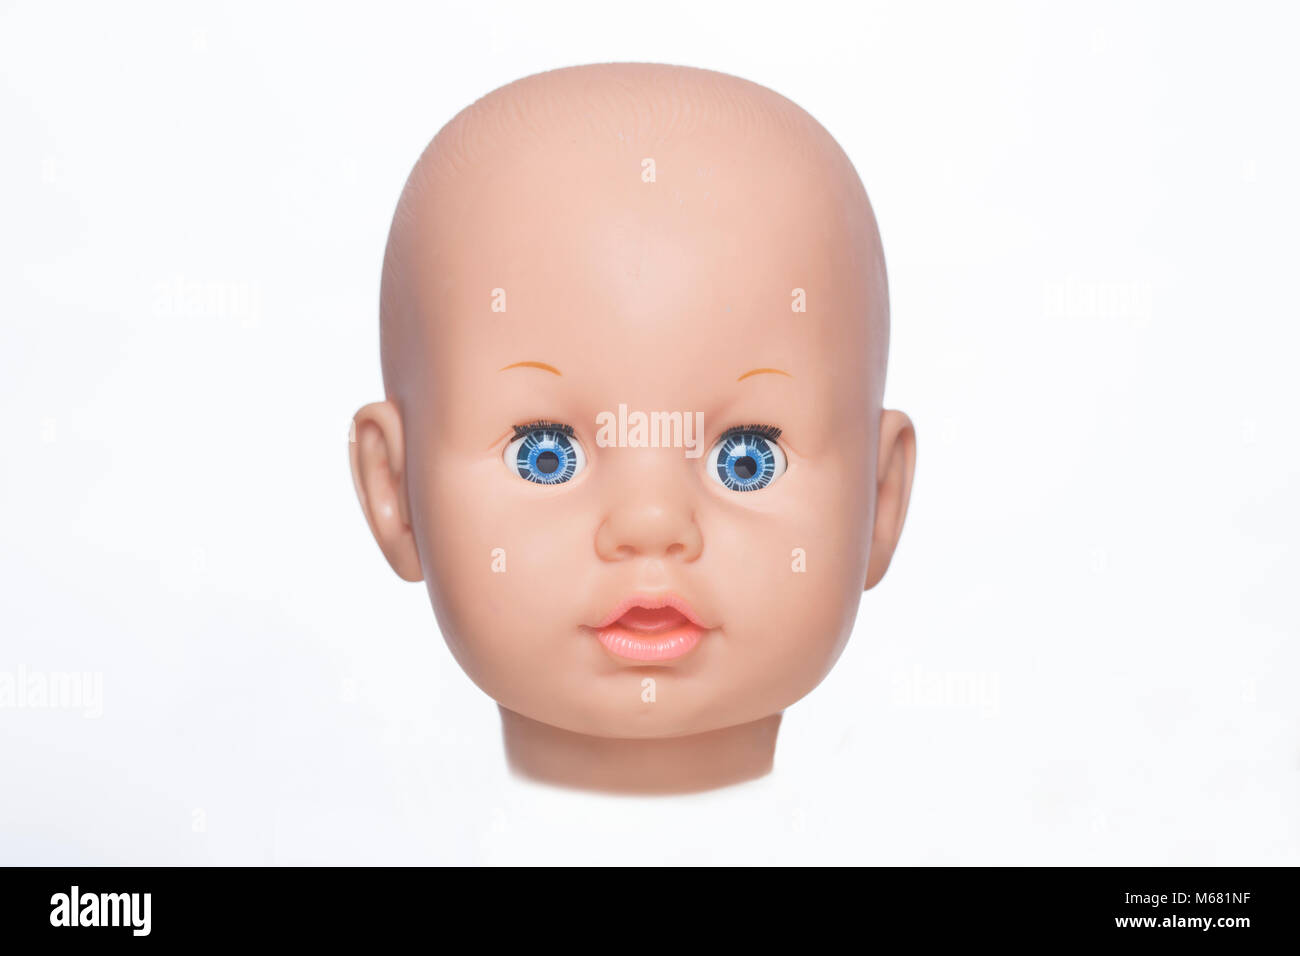 A baby dolls head Stock Photo